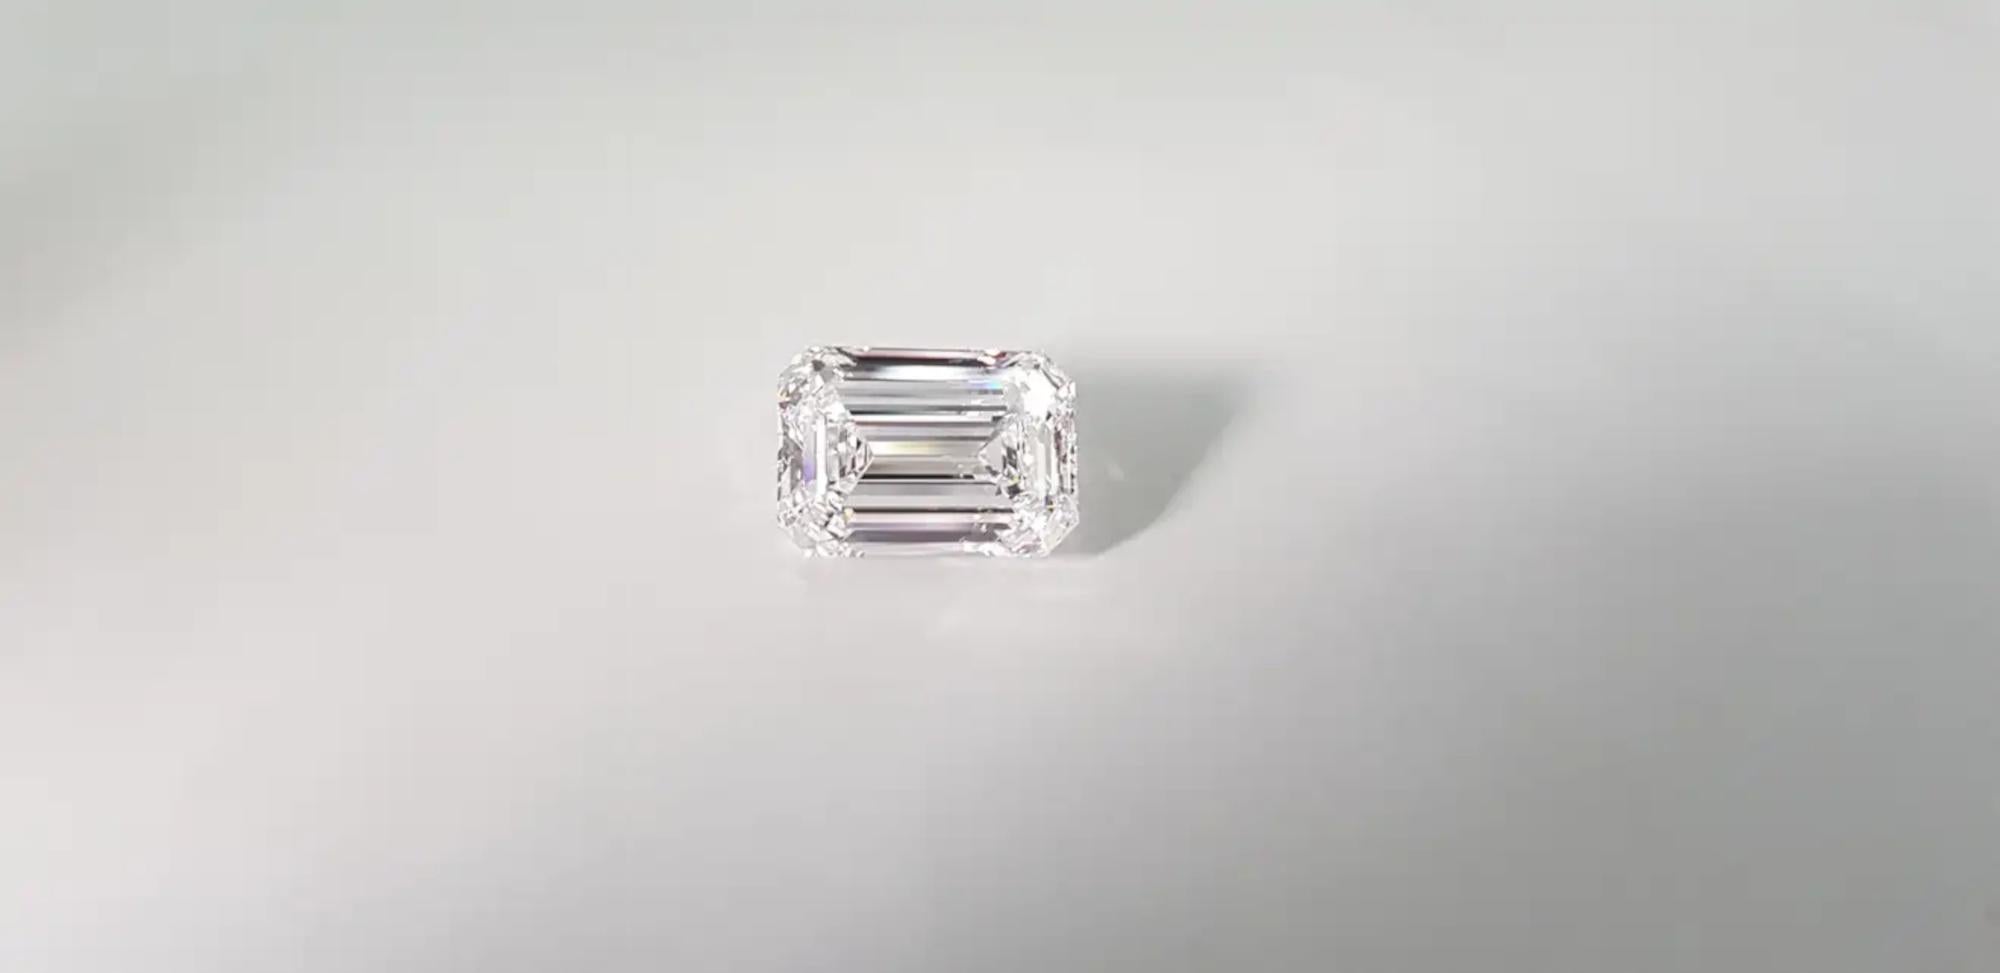 FLAWLESS GIA Certified 6.31 Carat Emerald Cut Diamond Solitaire Ring

The diamond has GRAFF laser inscription